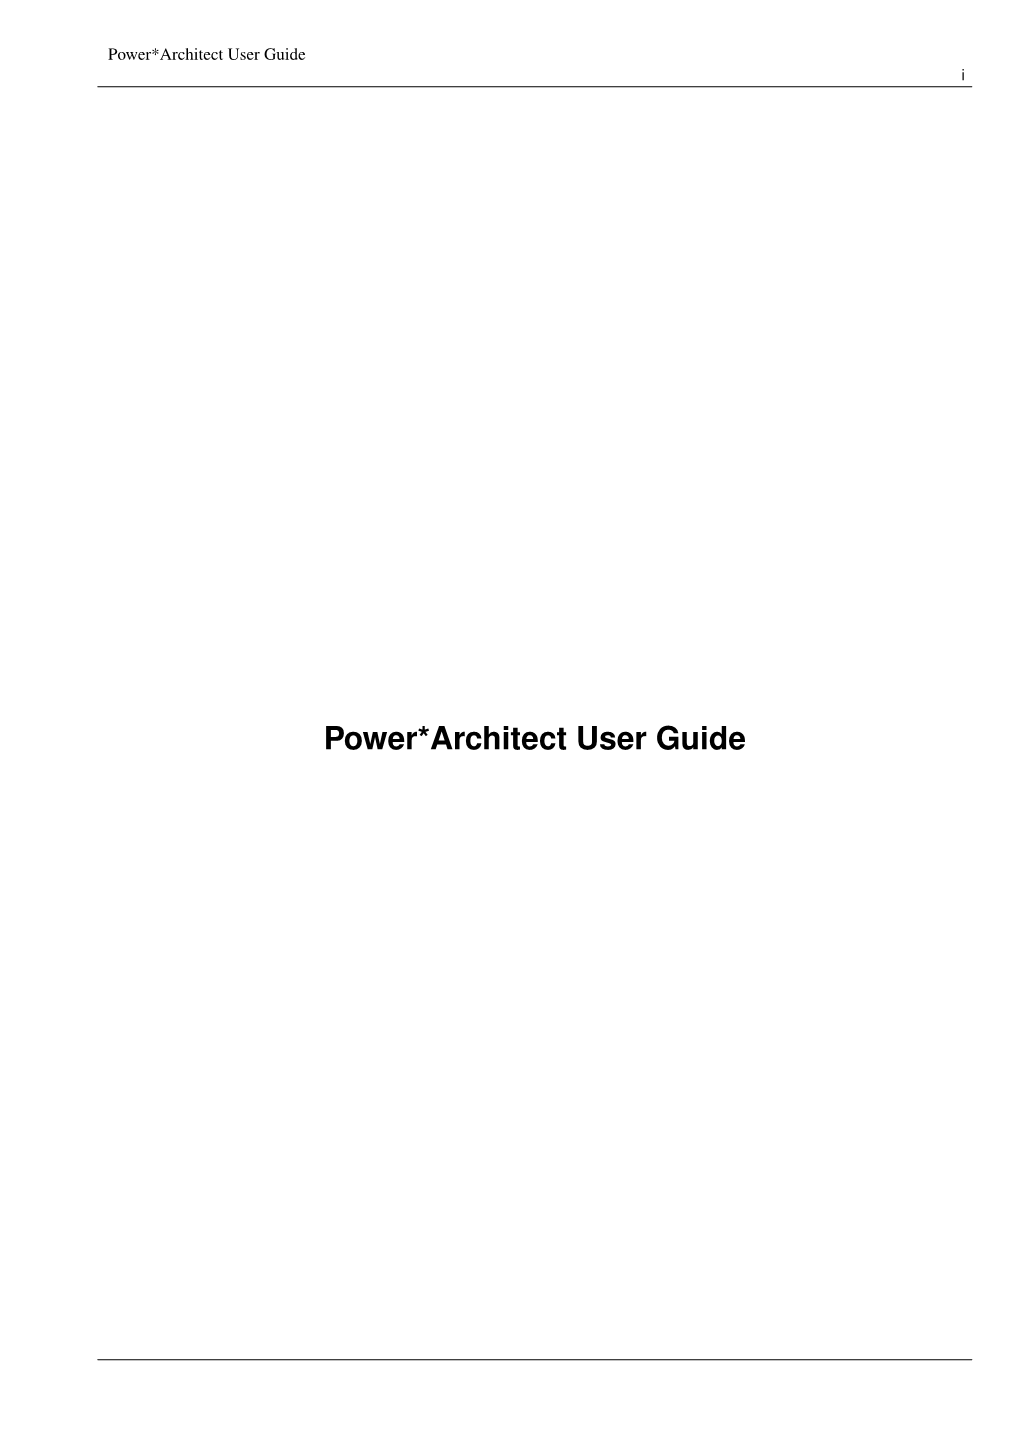 Power*Architect User Guide I